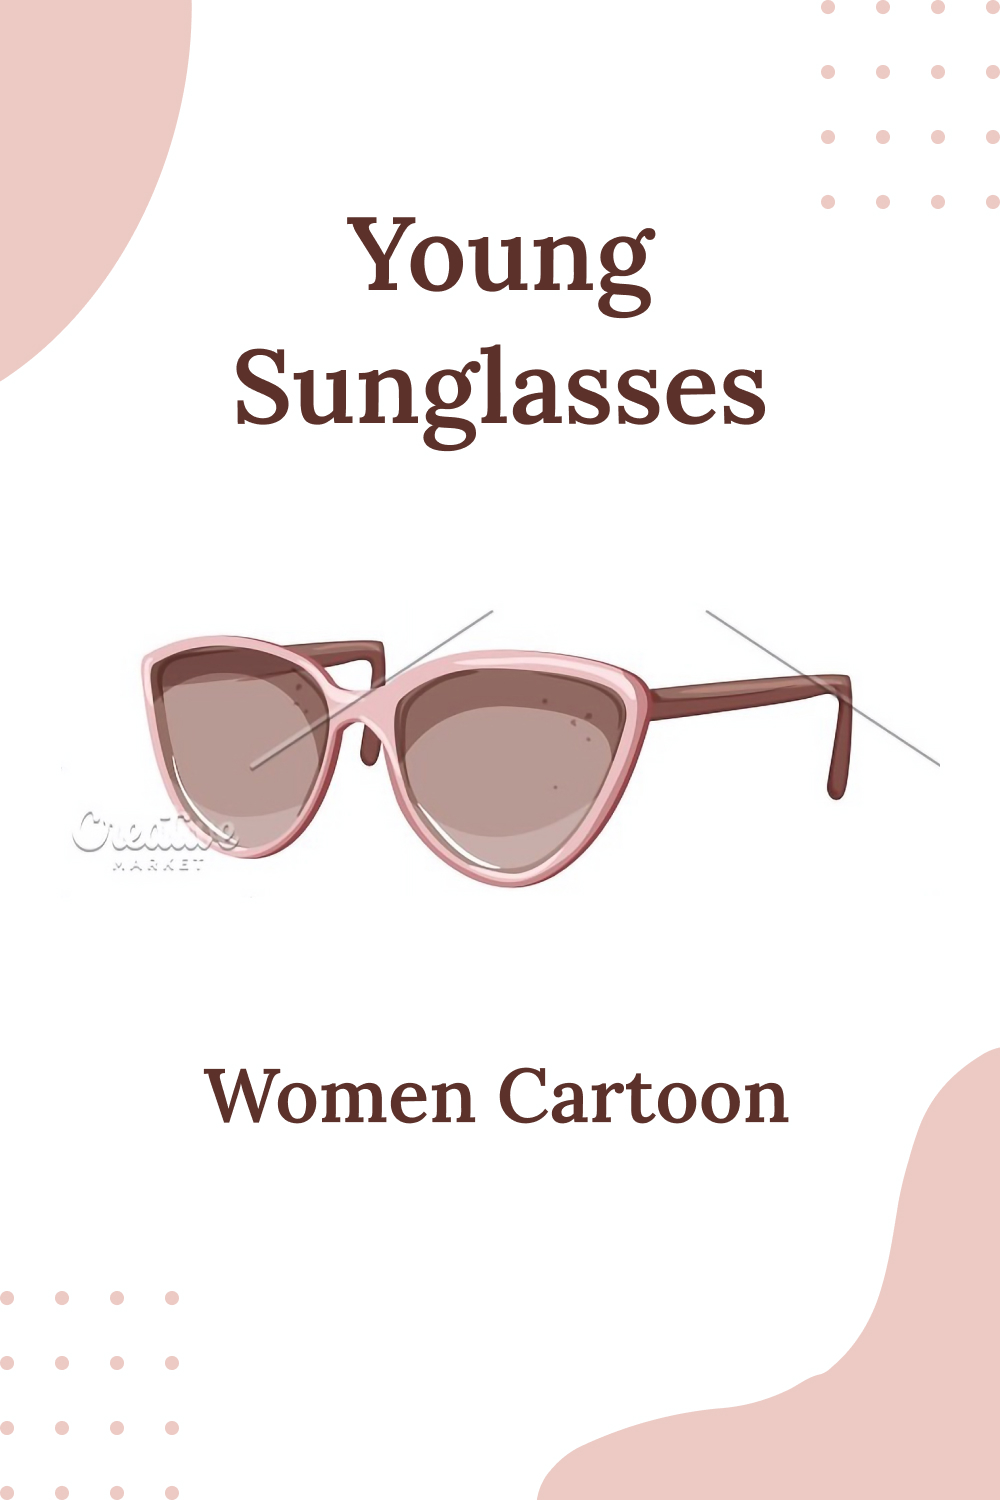 Young Sunglasses Women Cartoon Pinterest Cover.